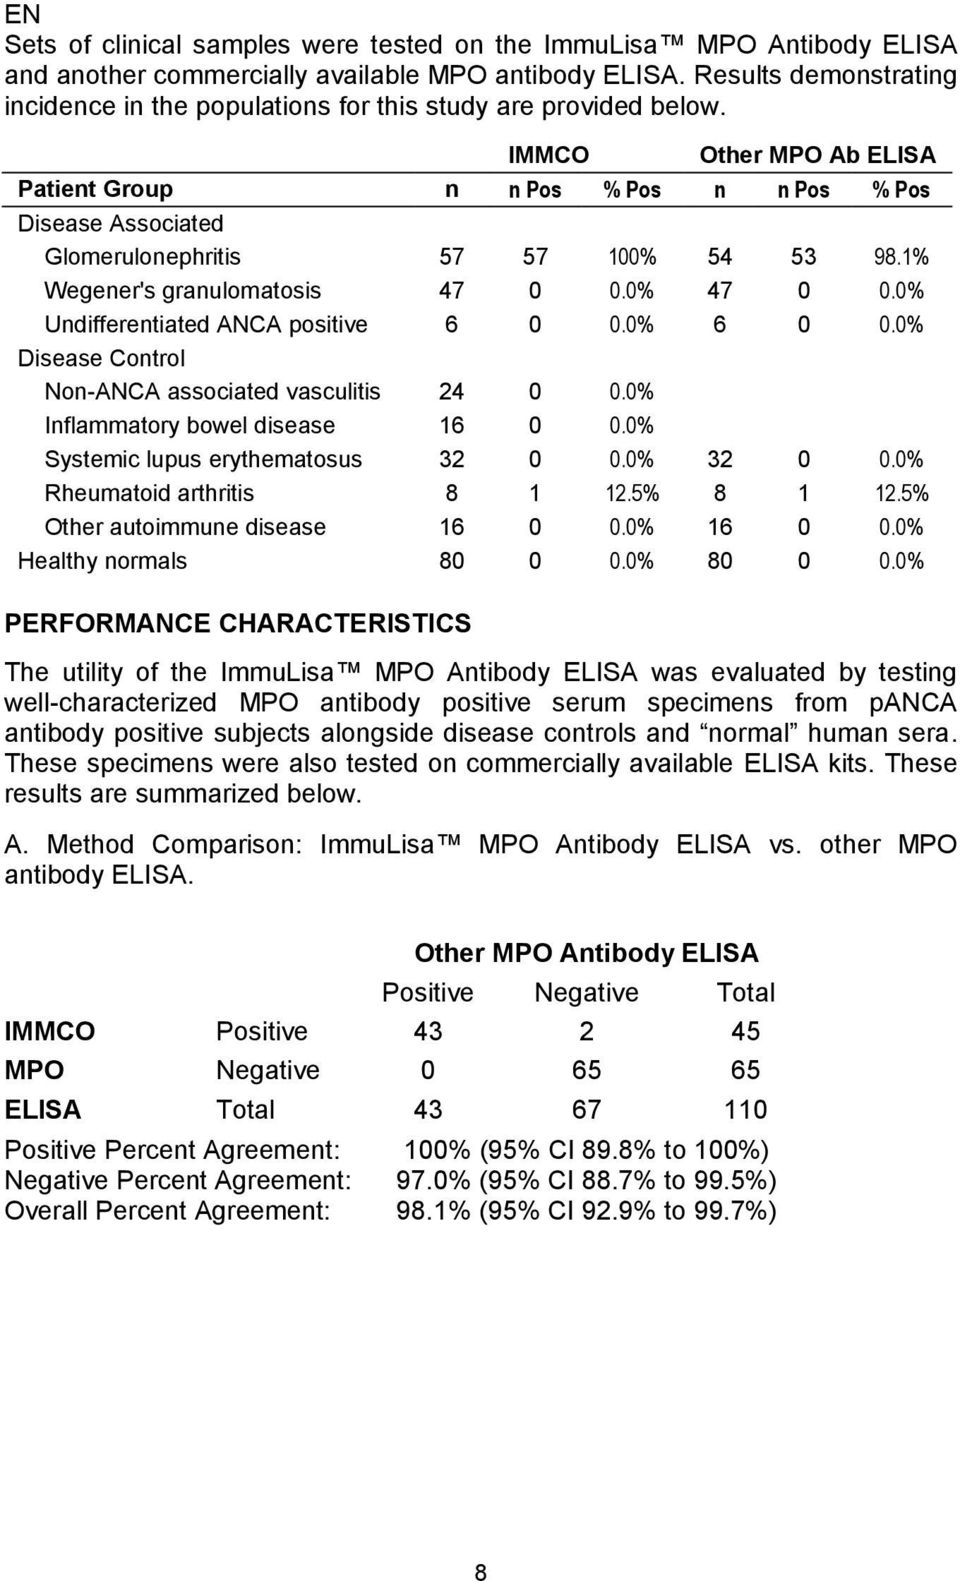 IMMCO Other MPO Ab ELISA Patient Group n n Pos % Pos n n Pos % Pos Disease Associated Glomerulonephritis 57 57 100% 54 53 98.1% Wegener's granulomatosis 47 0 0.0% 47 0 0.